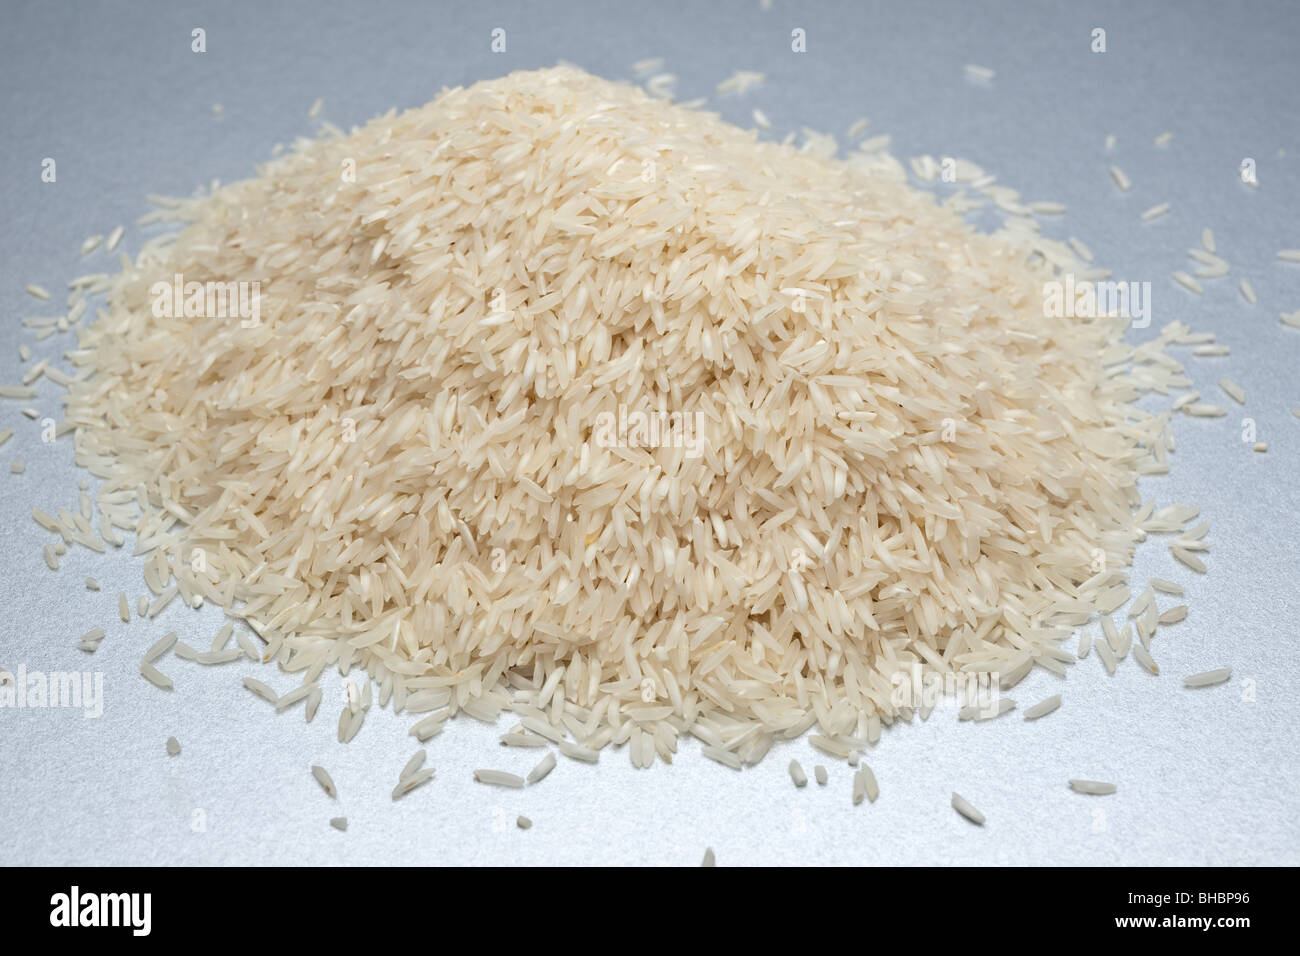 Heap of white uncooked Basmati rice Stock Photo